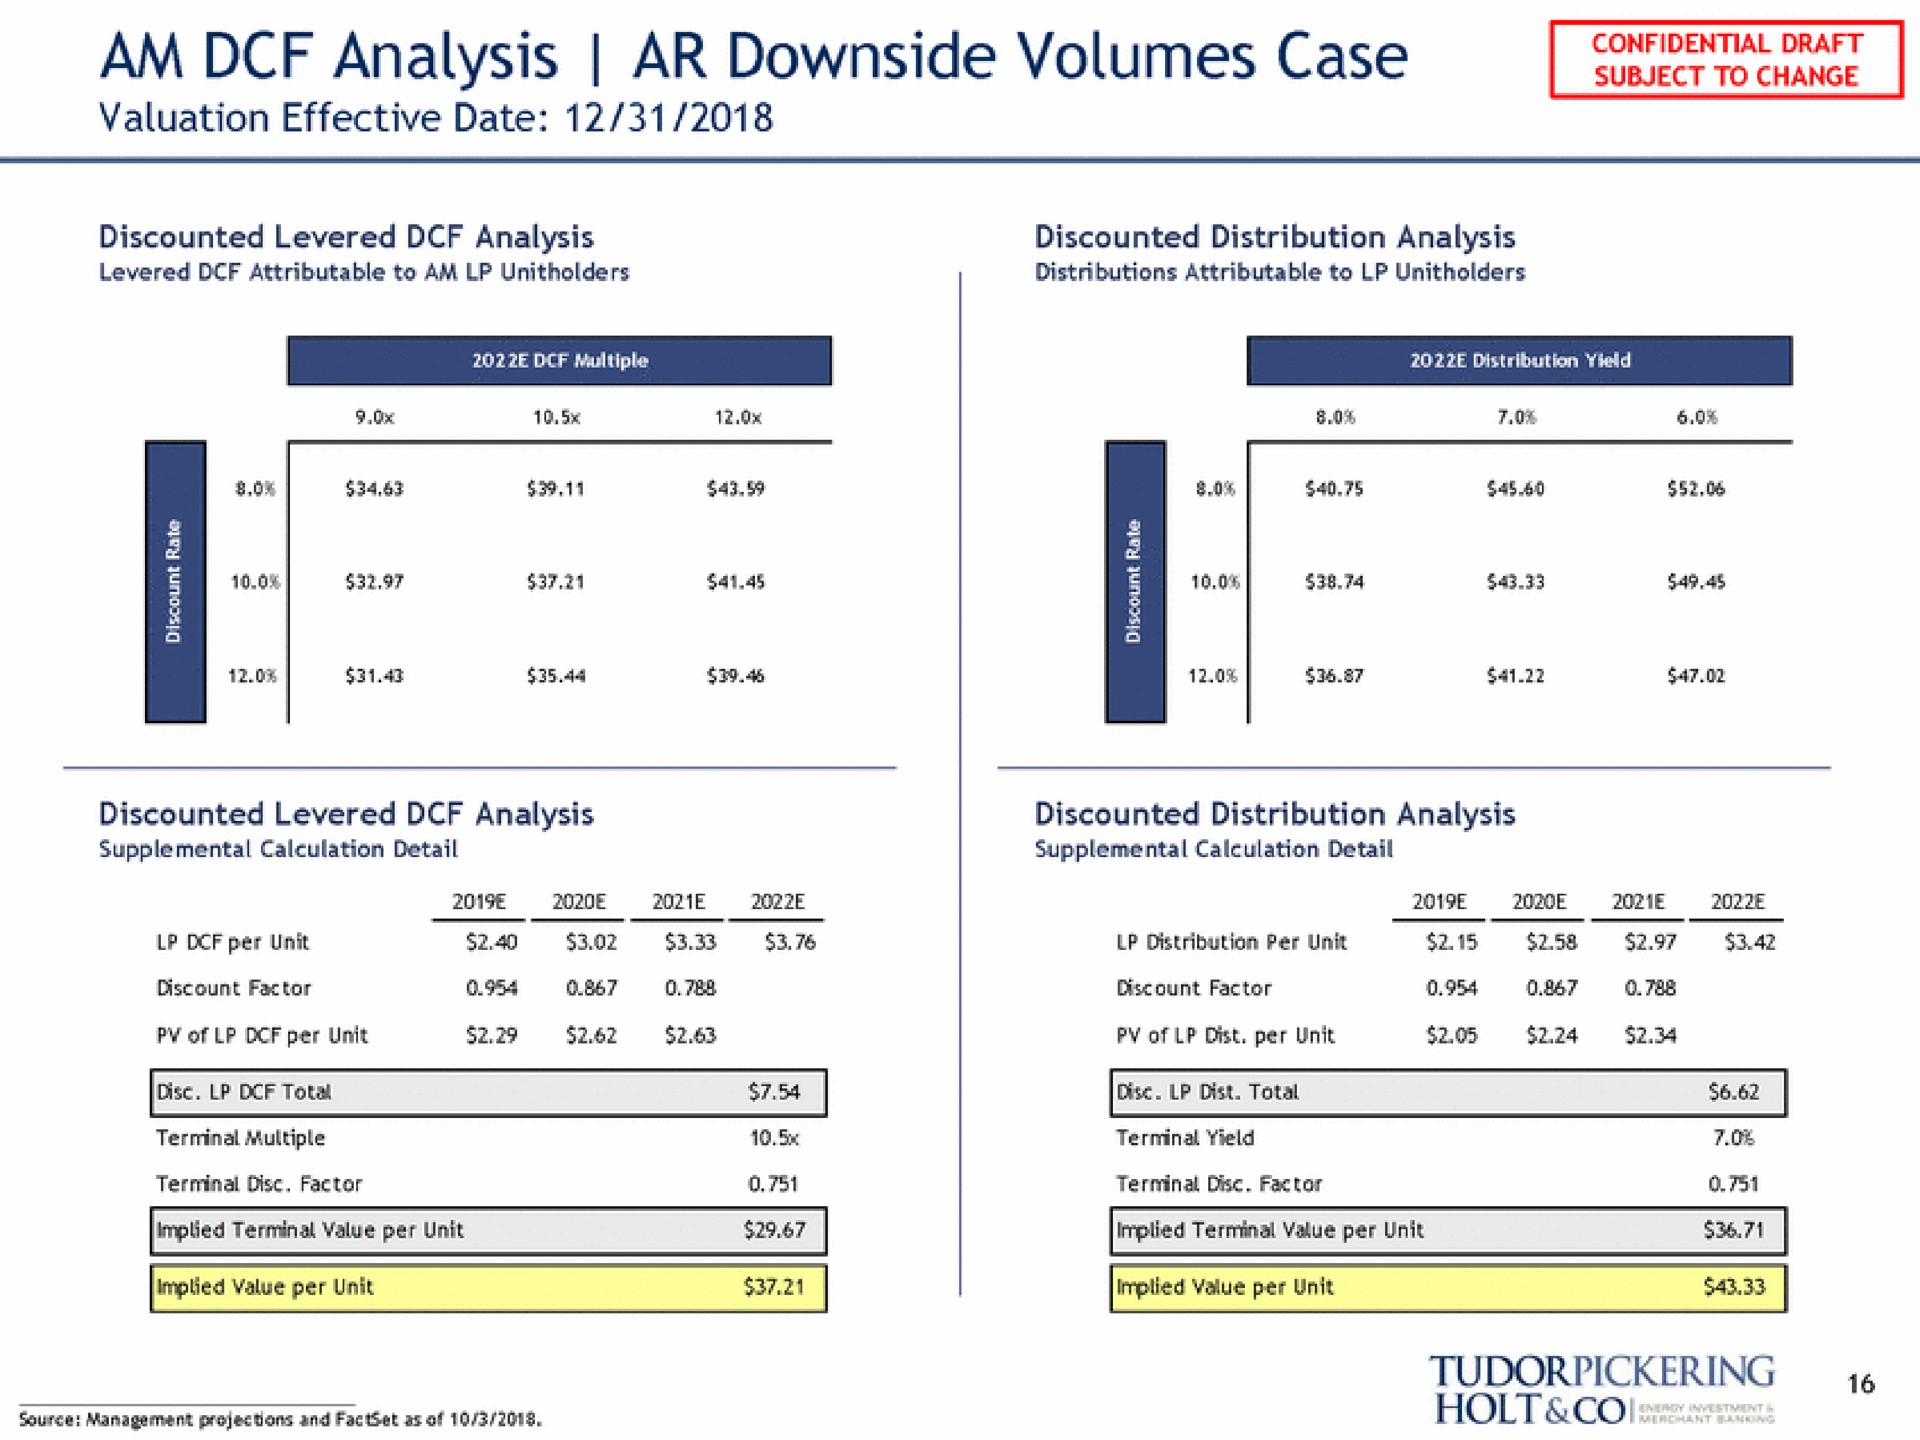 am analysis downside volumes case holt | Tudor, Pickering, Holt & Co